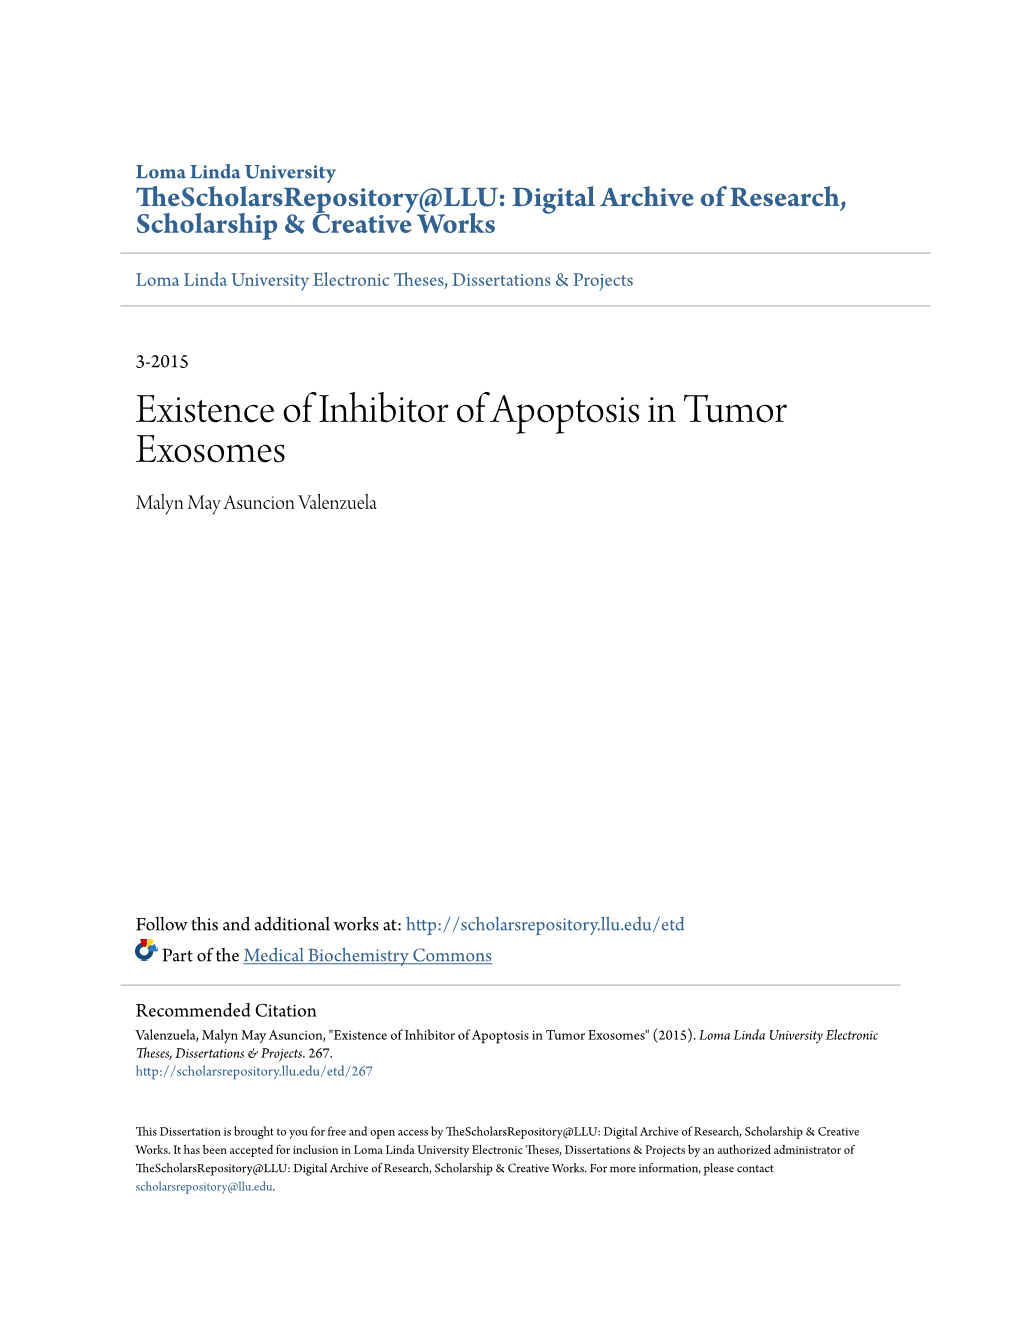 Existence of Inhibitor of Apoptosis in Tumor Exosomes Malyn May Asuncion Valenzuela